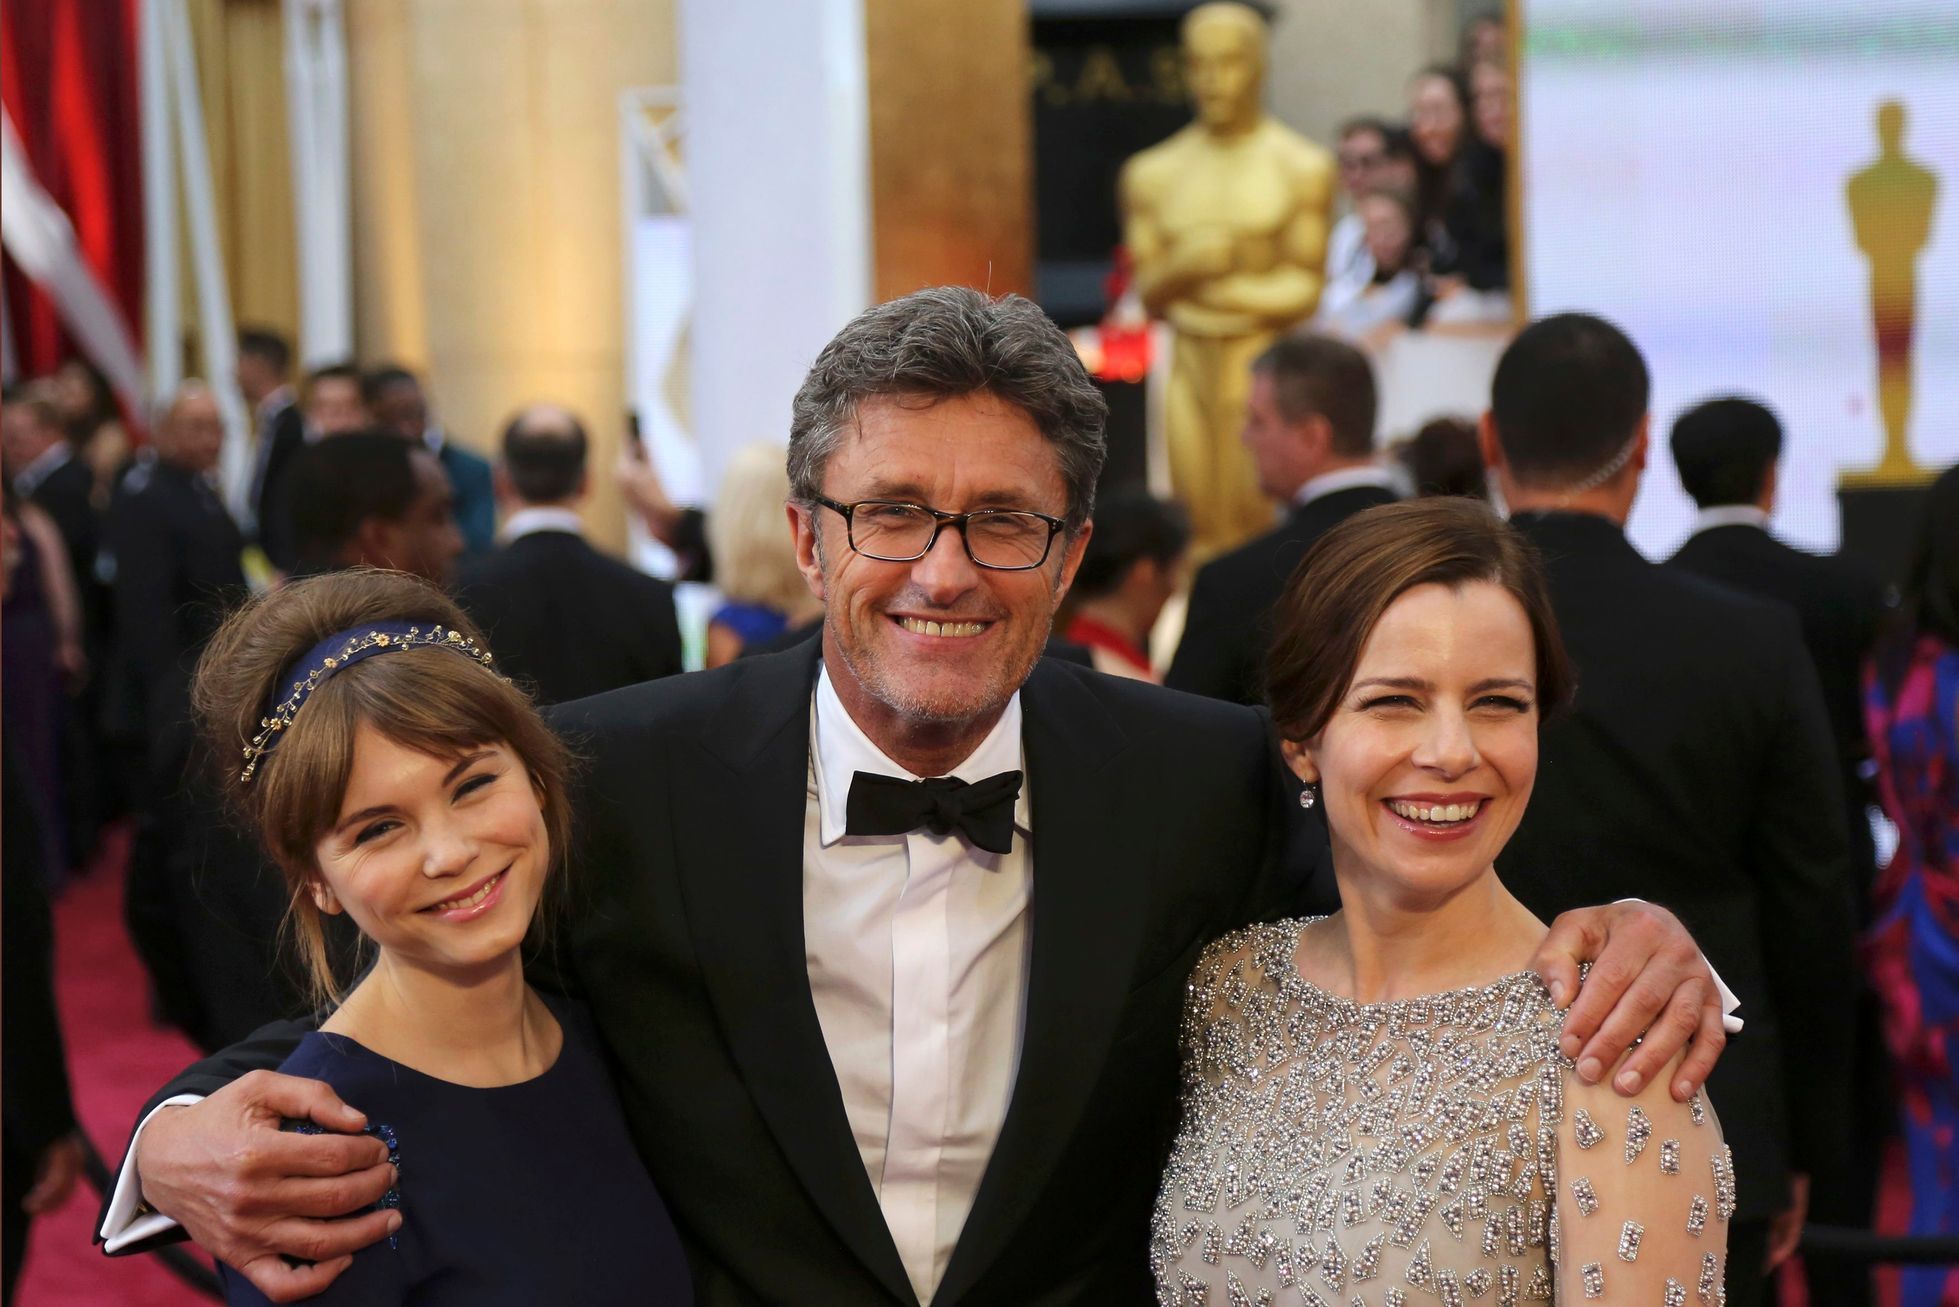 Trzebuchowska, Pawlikowski and Kulesza arrive at the 87th Academy Awards in Hollywood